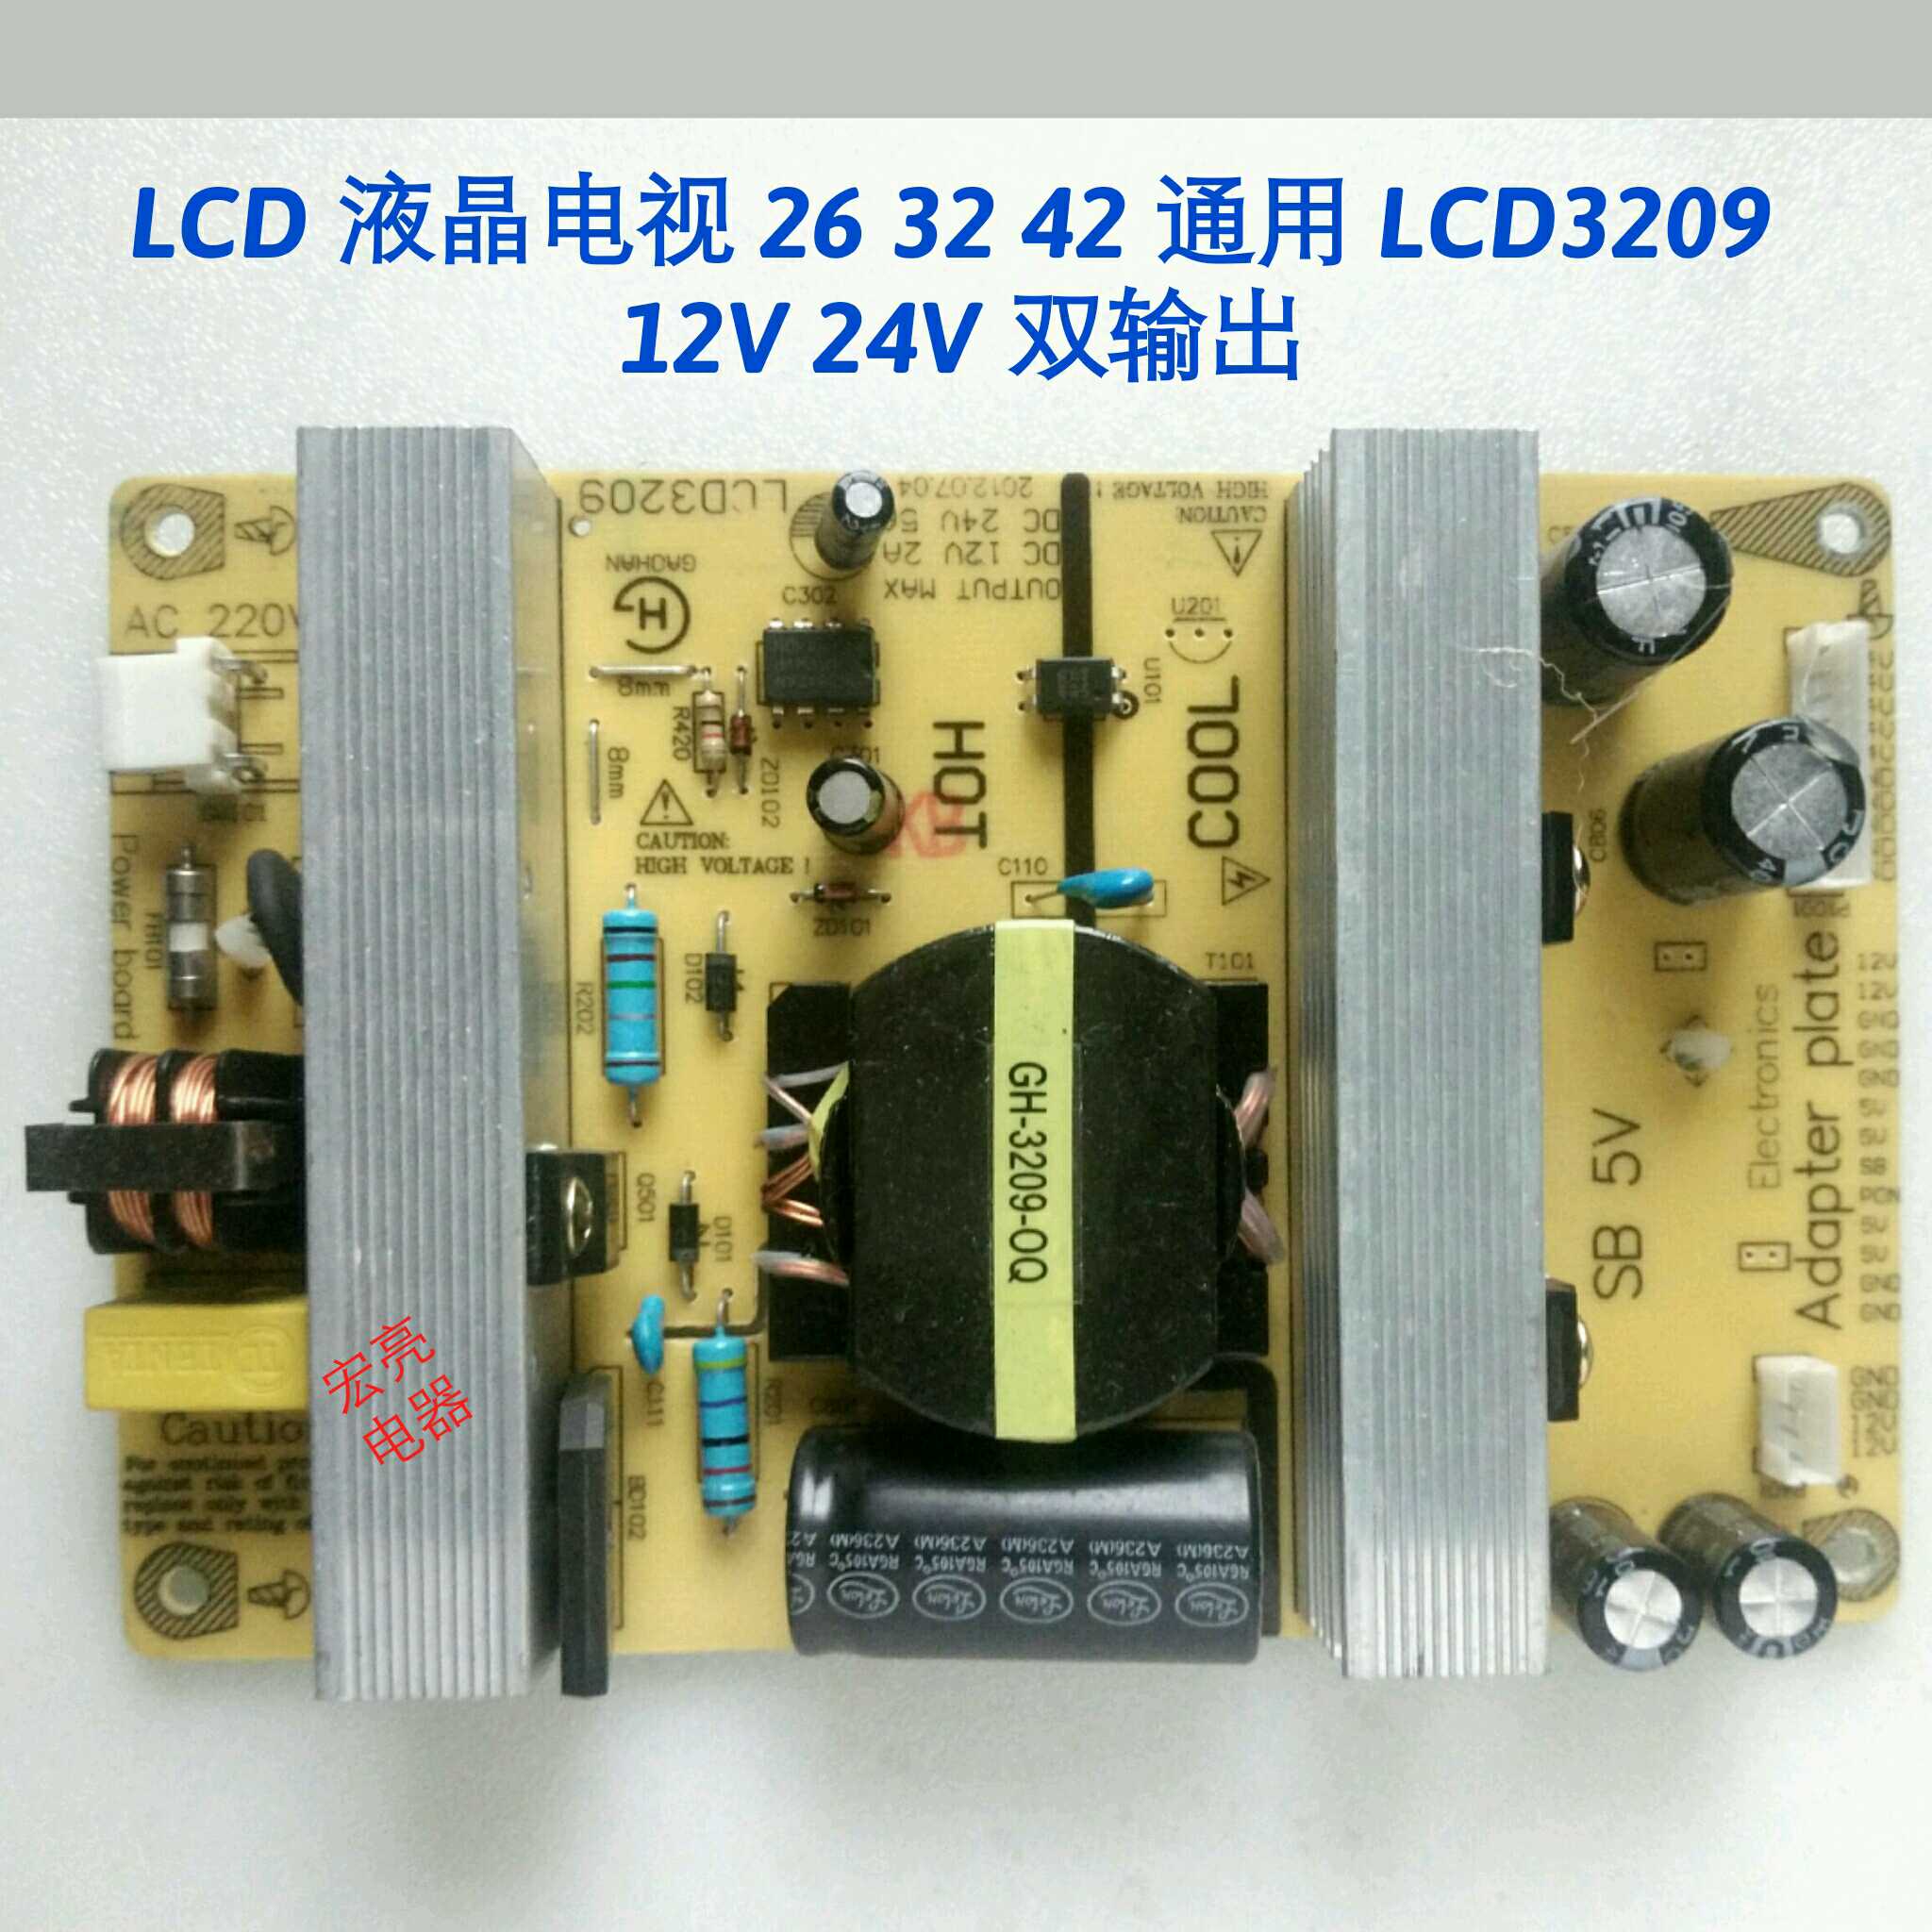 LCD 液晶电视 26 32 42 通用 LCD3209 
12V 24V 双输出